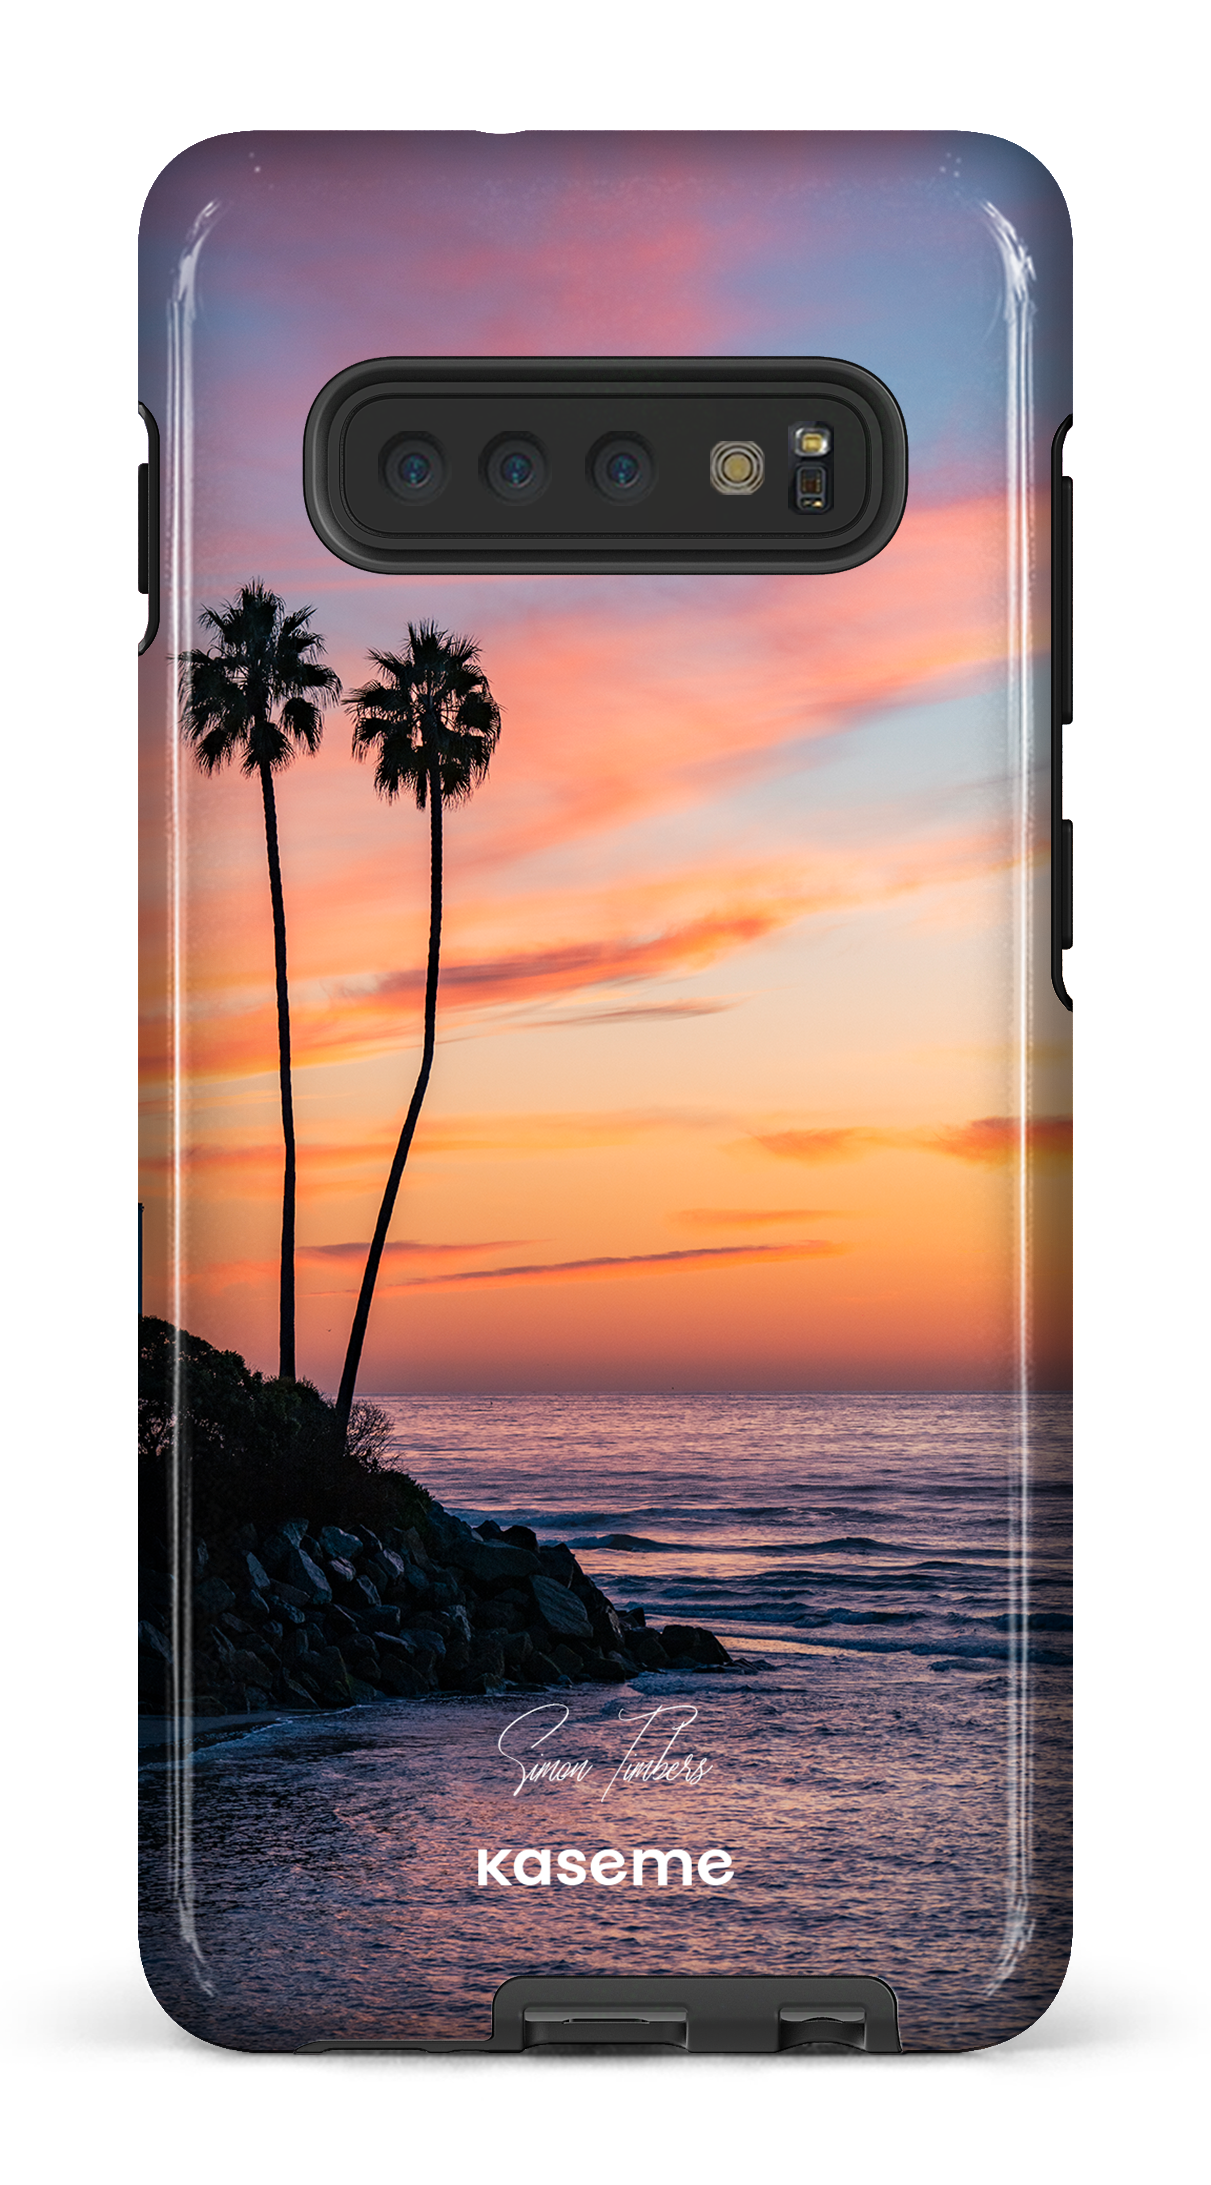 Sunset Palms by Simon Timbers - Galaxy S10 Plus